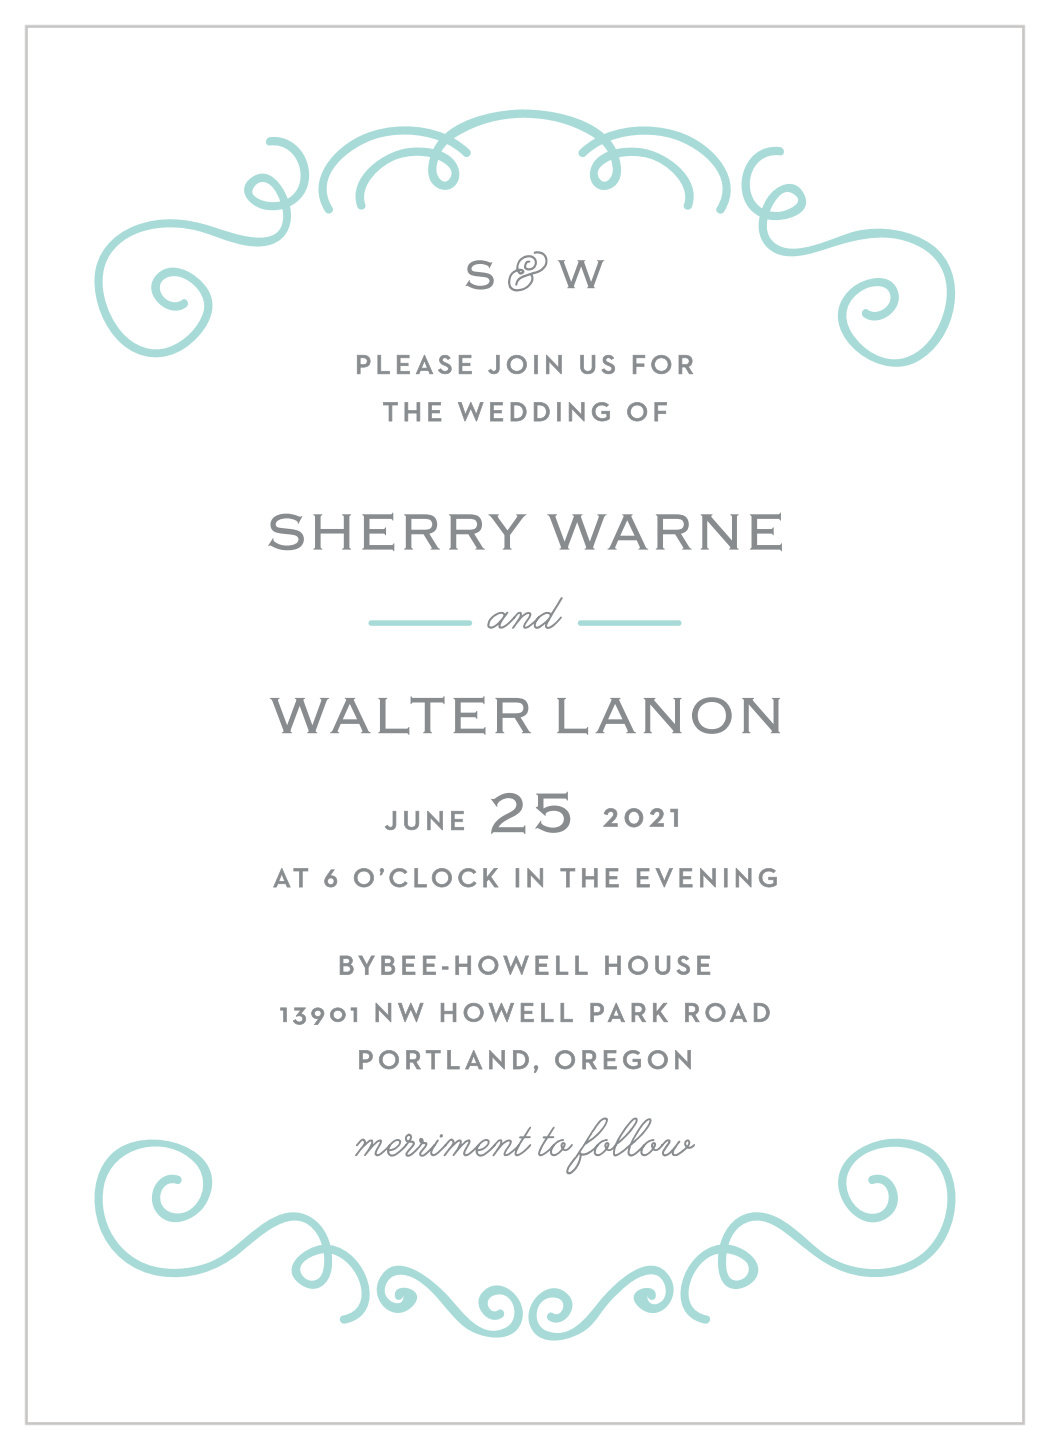 Classy & Curly Wedding Invitations